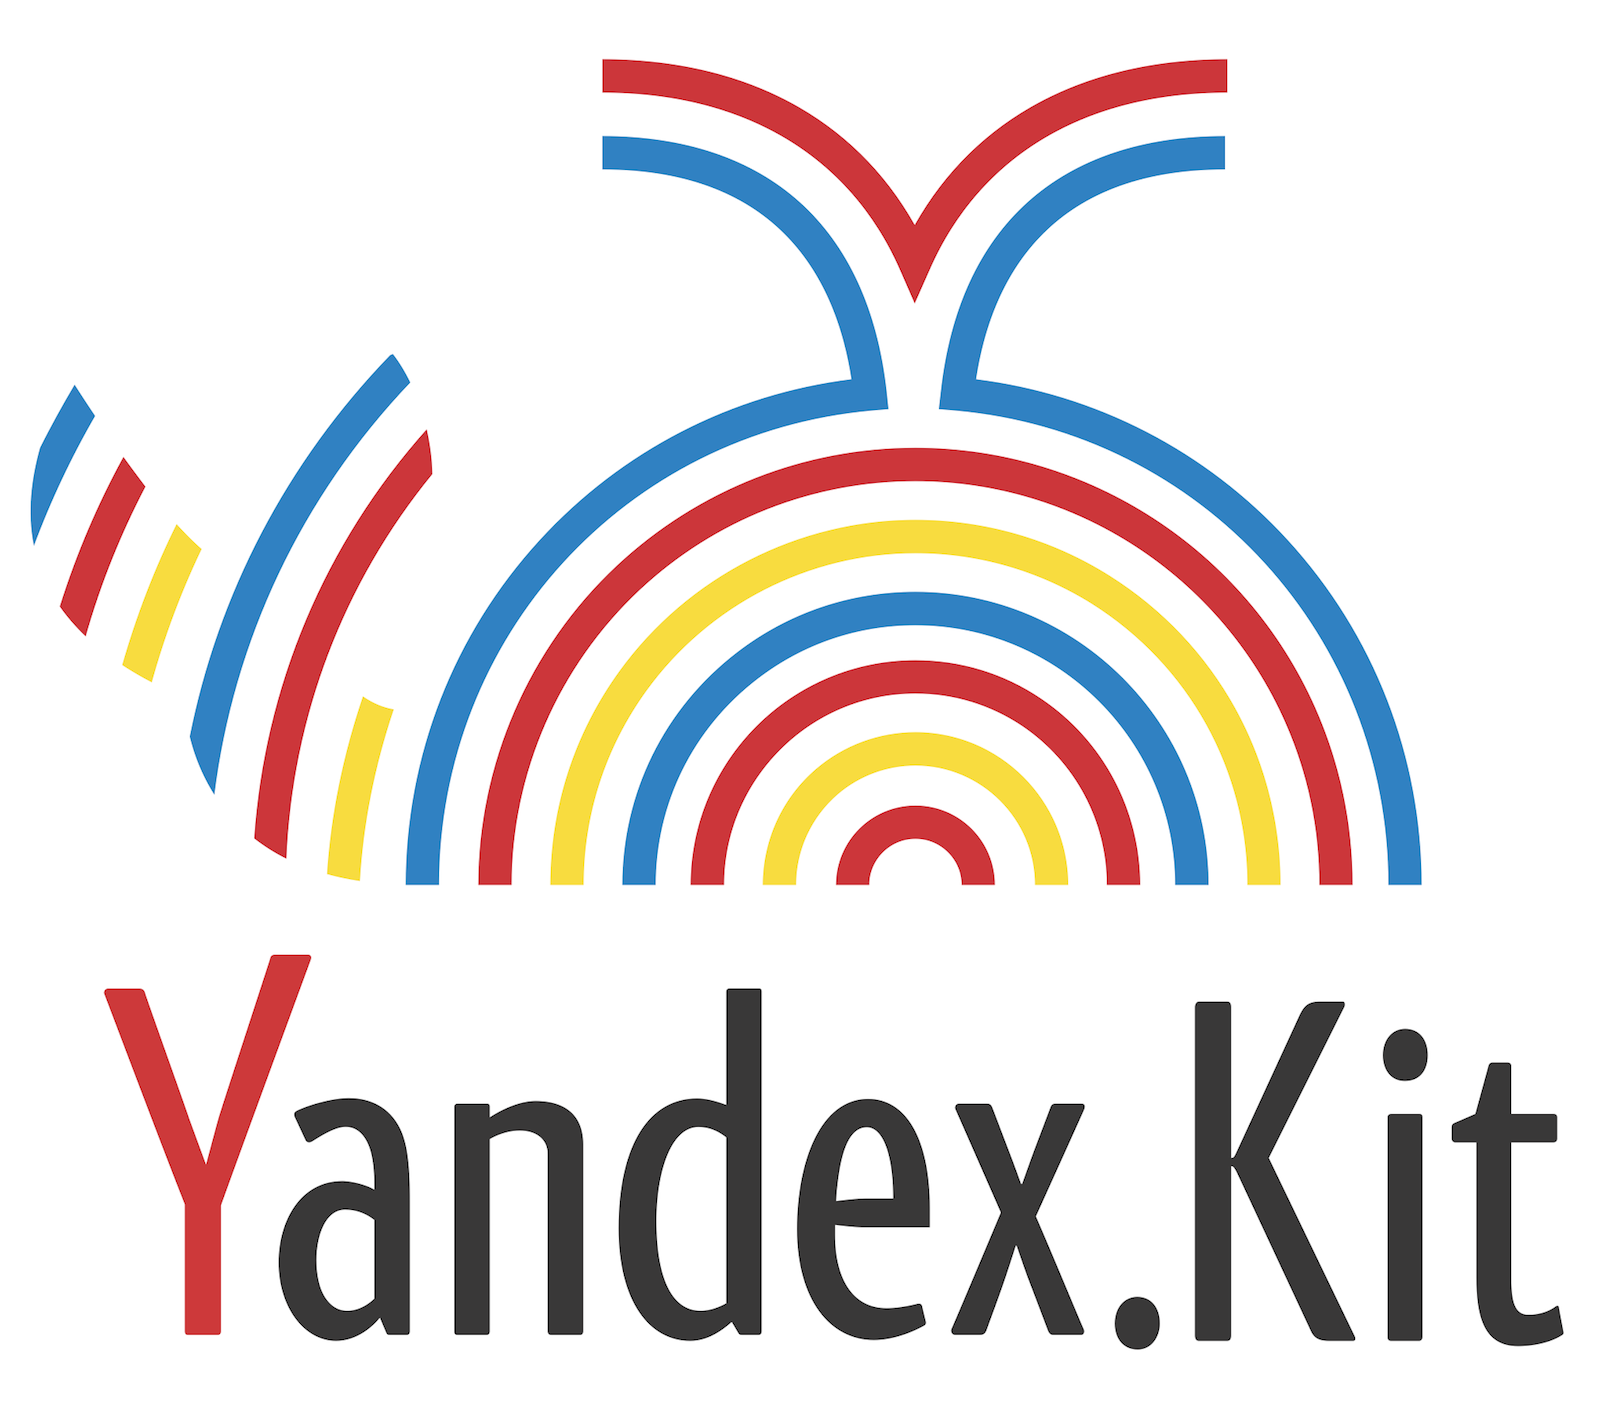 Yandex.Kit - Яндекс.Кит - Yandex.Shell